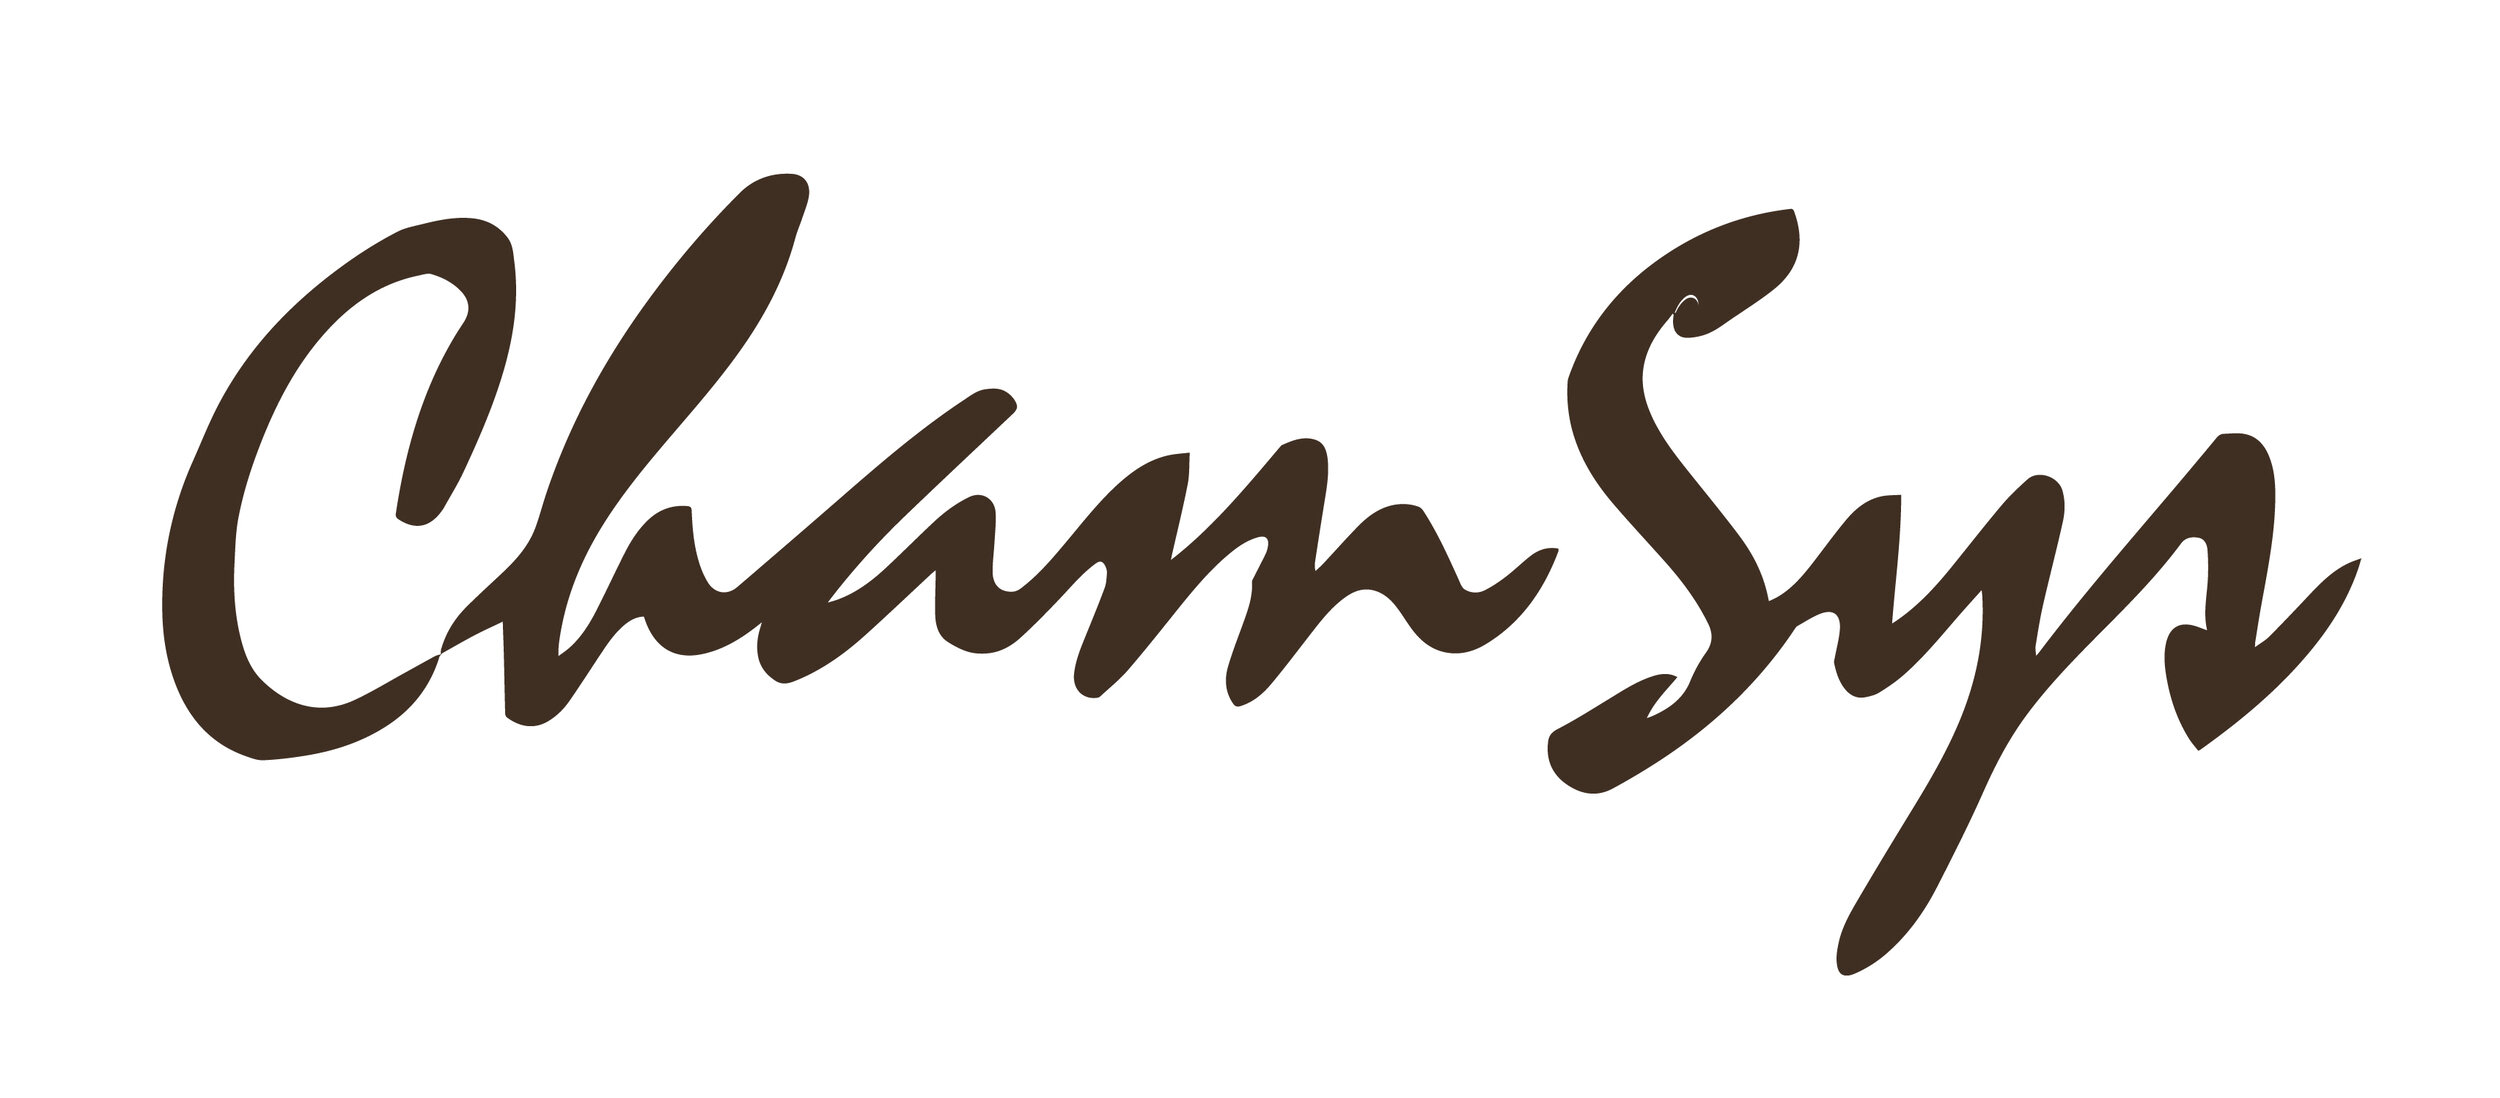 ChamSys brown logo.jpg